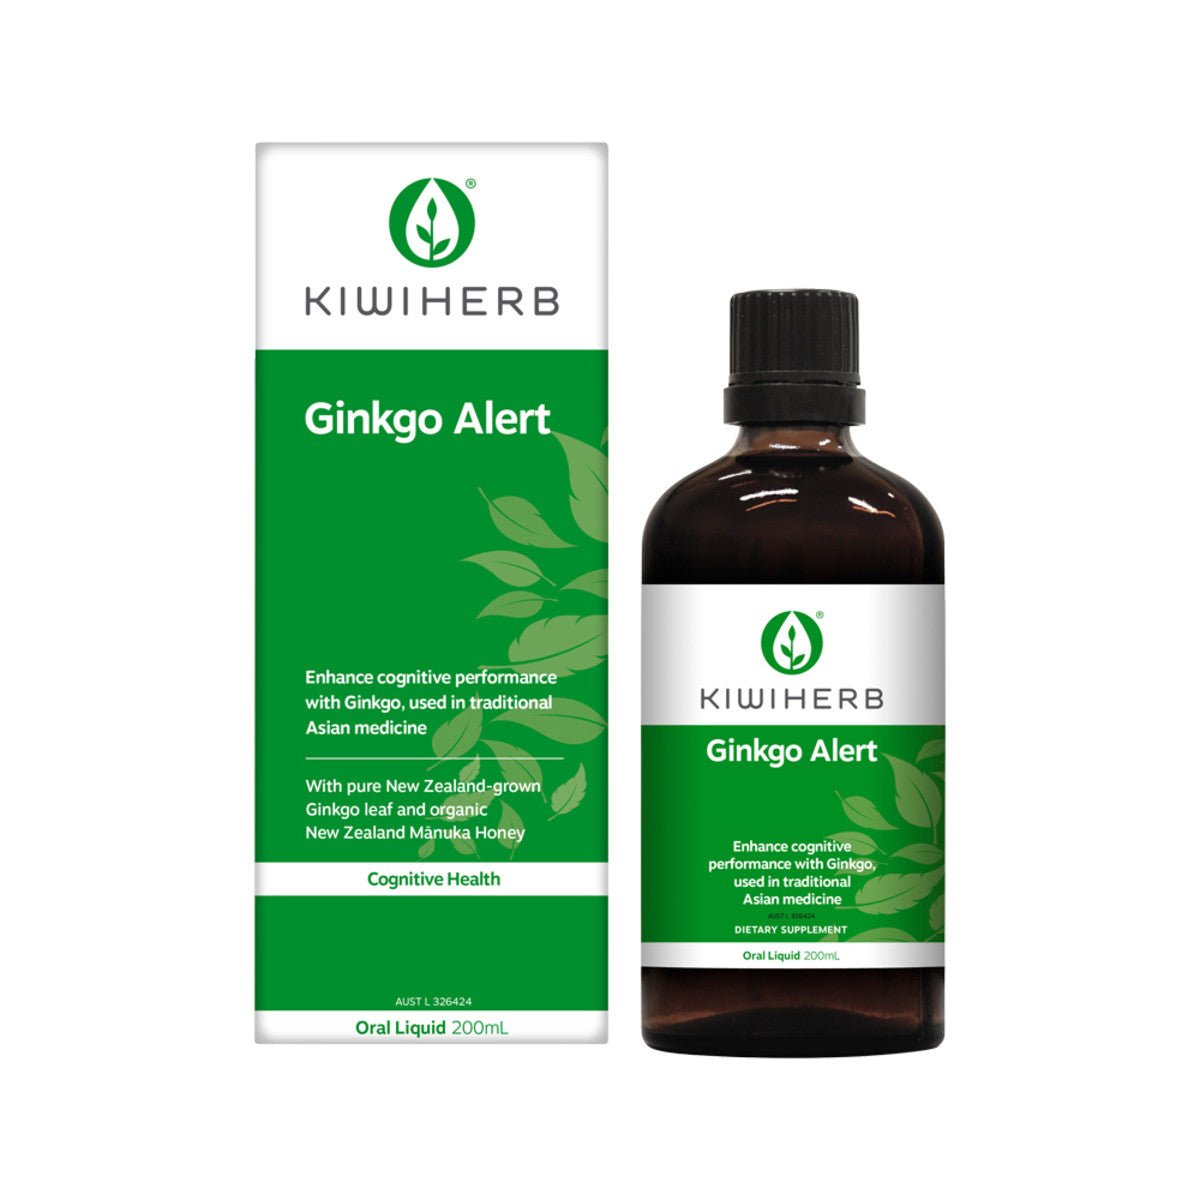 KIWIHERB Ginkgo Alert 200ml - Dr Earth - Supplements